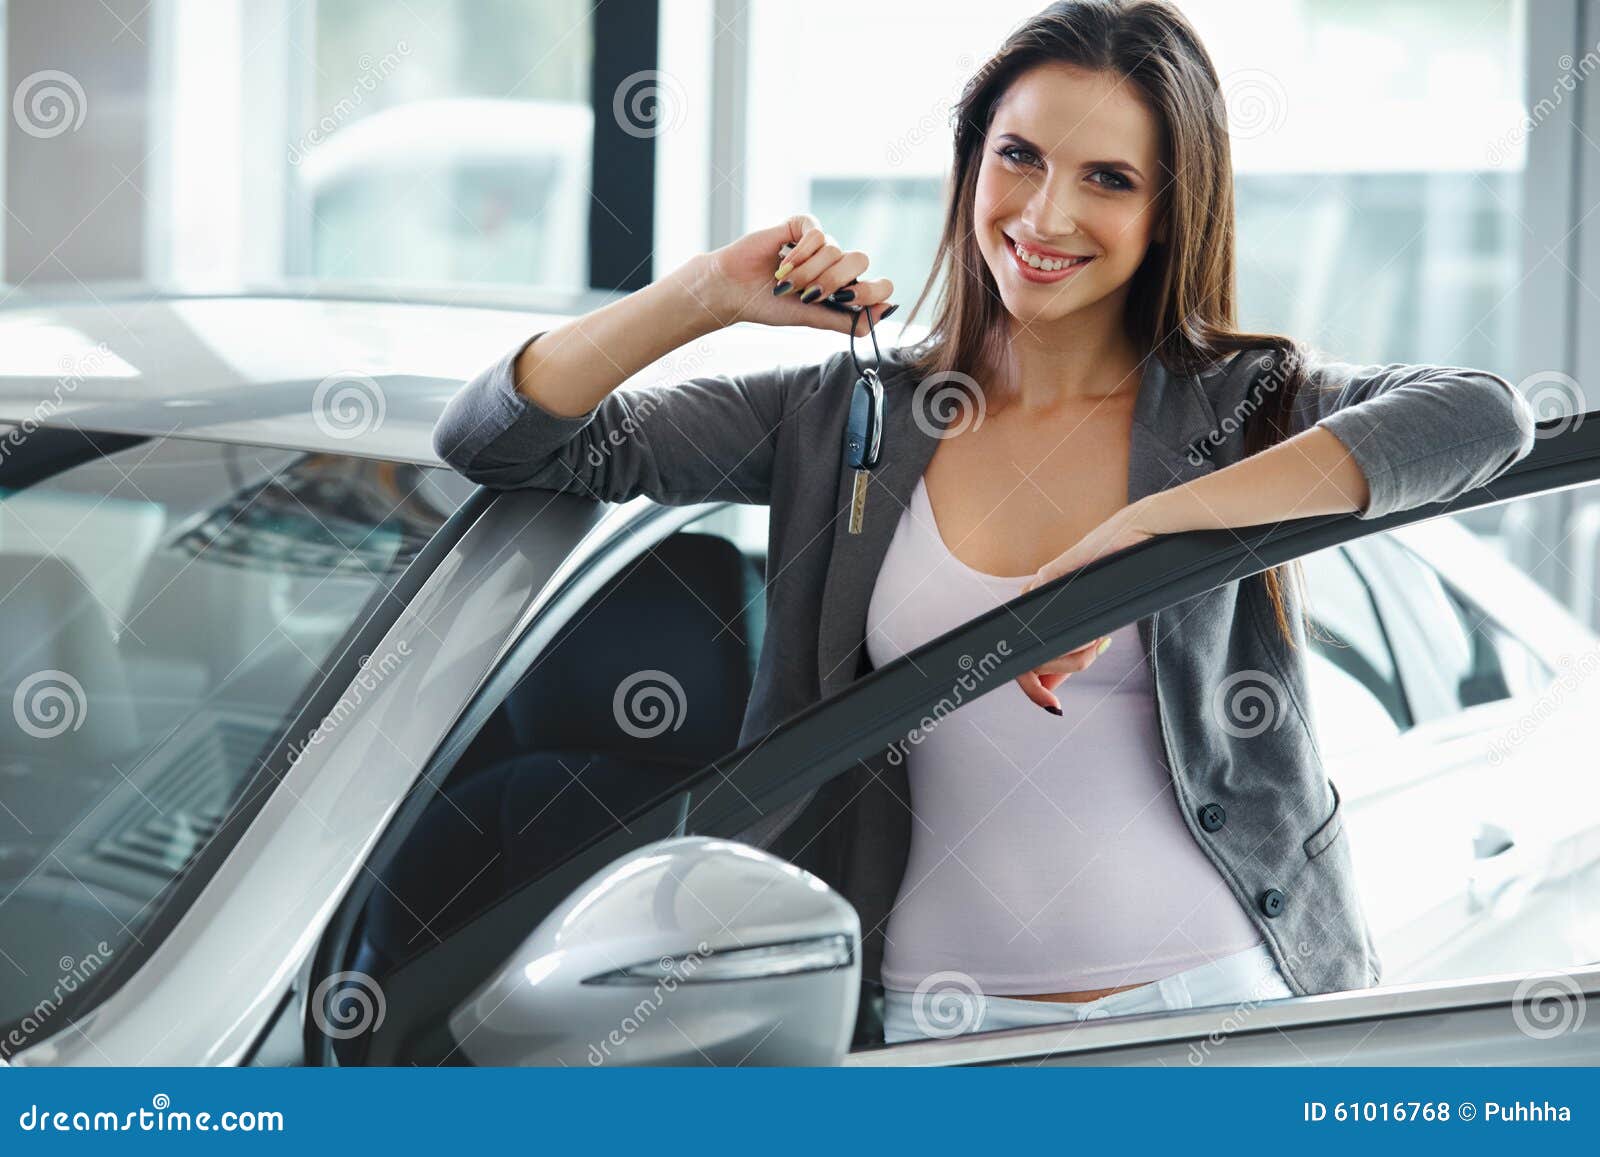 Woman Driver Holding Car Keys. Car Showroom. Stock Photo - Image of ...